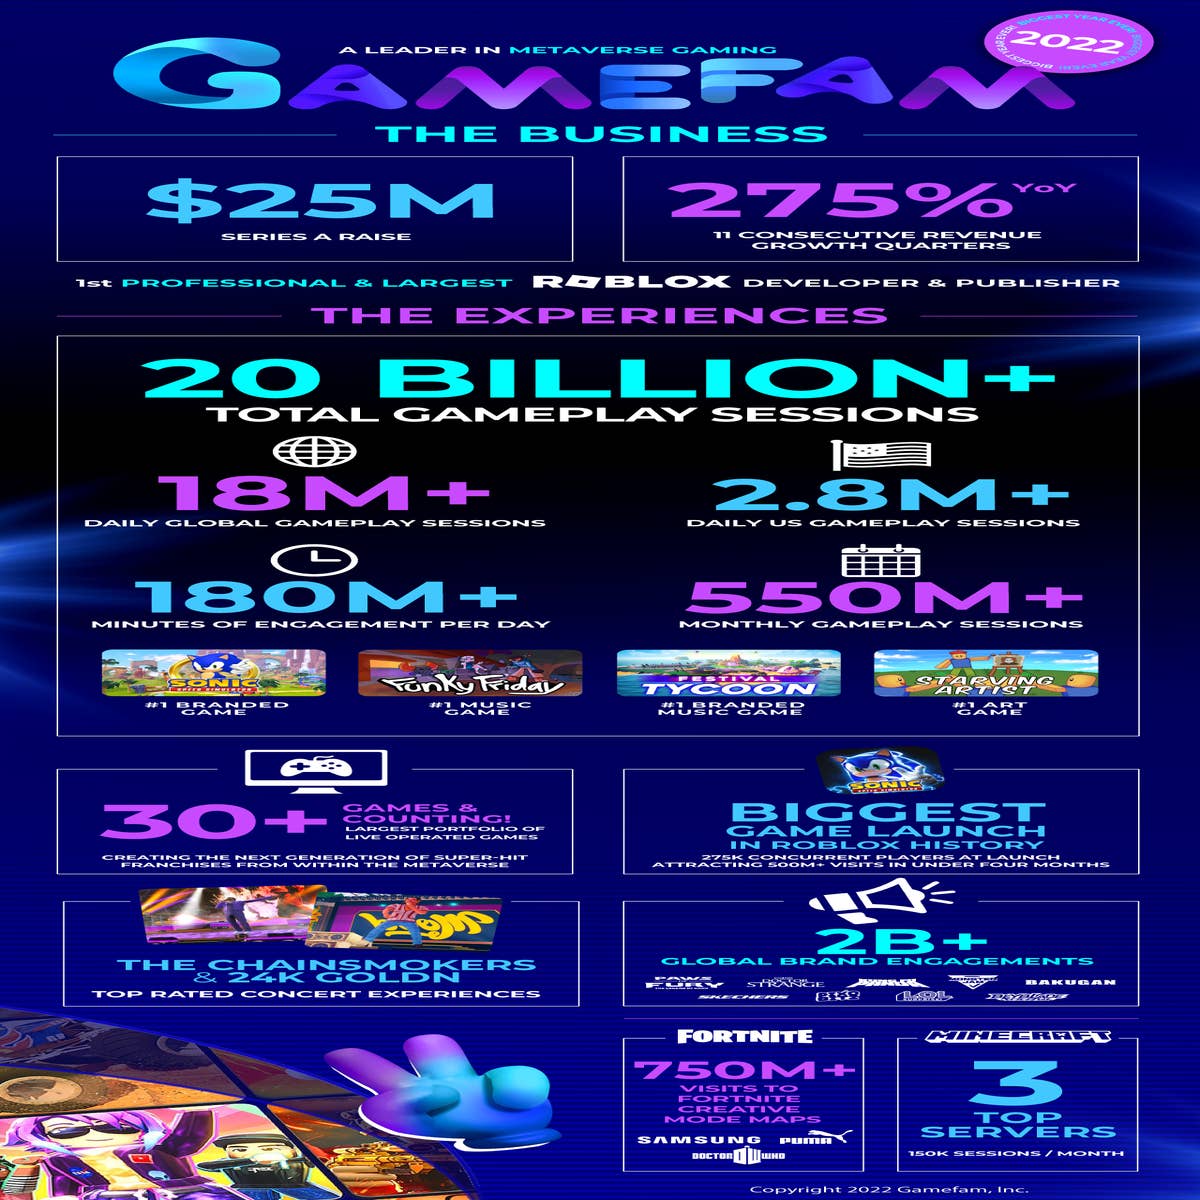 Gamefam 2022: Leading Metaverse Gaming Company Celebrates Record